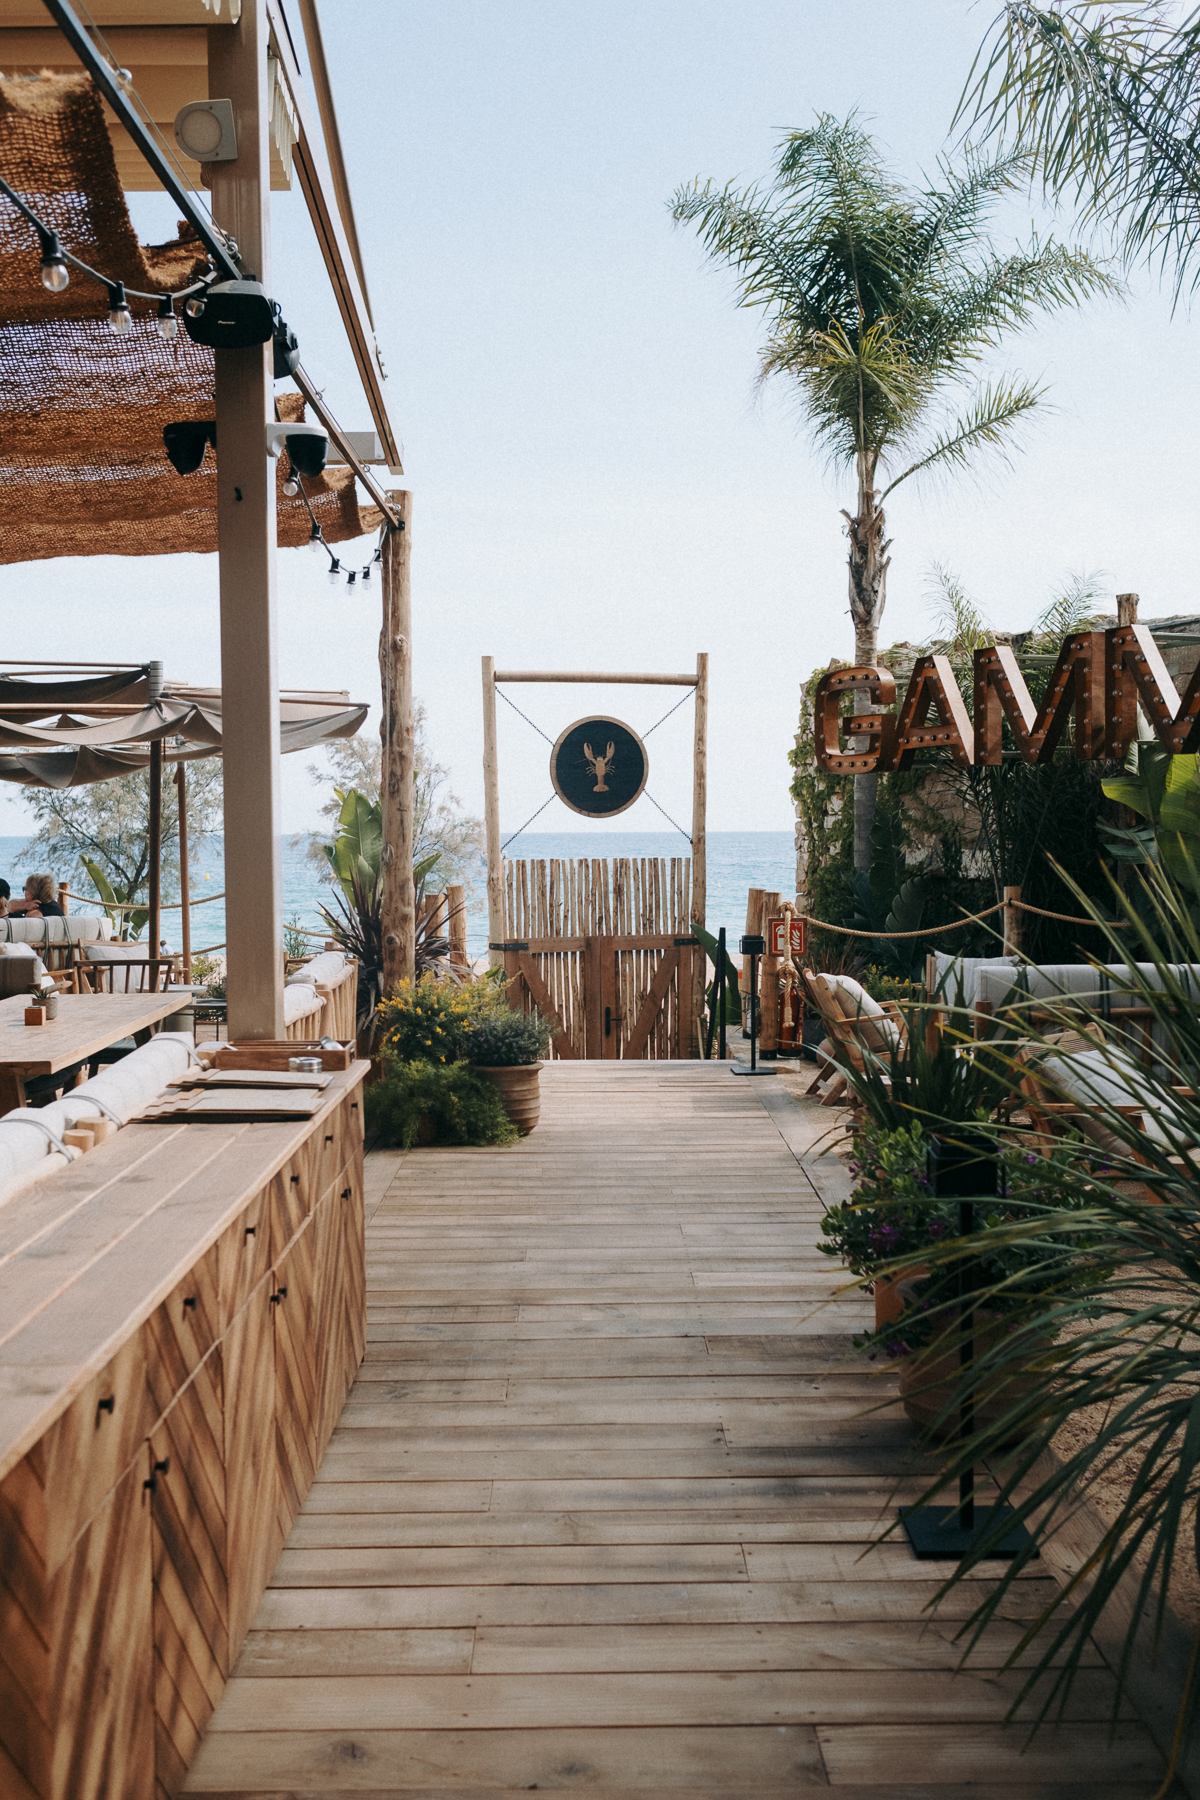 Gammarus Restaurant & Beach Club​